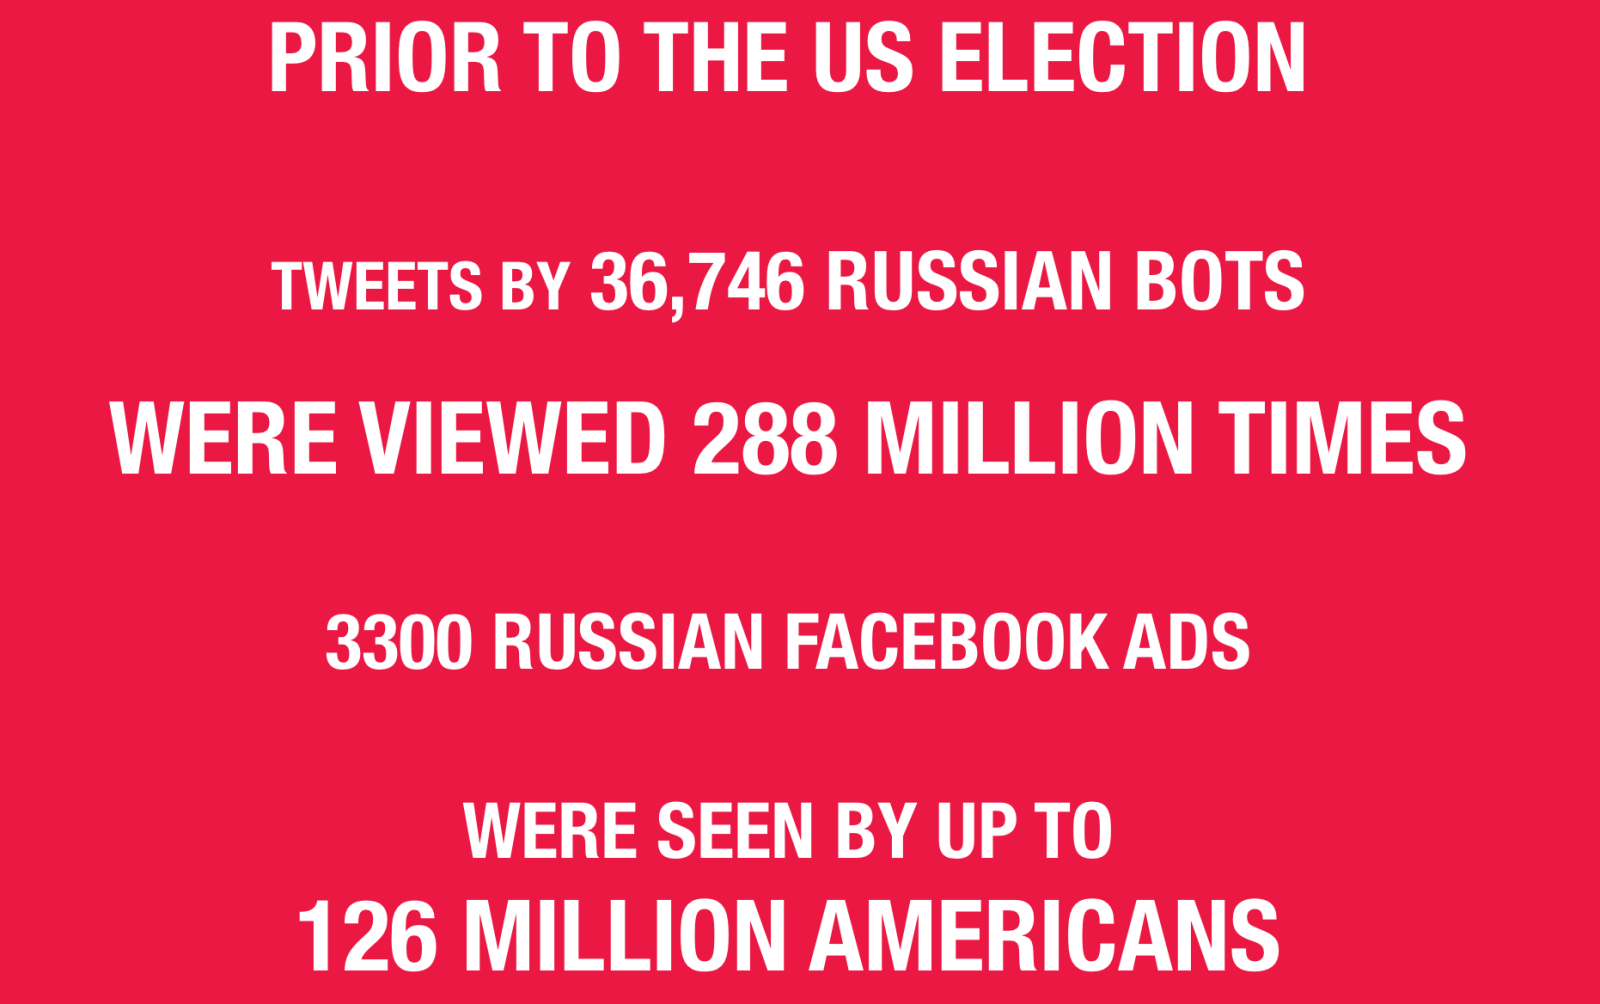 Russia, U.S. election, Russian hacking, Facebook, fake news, social media